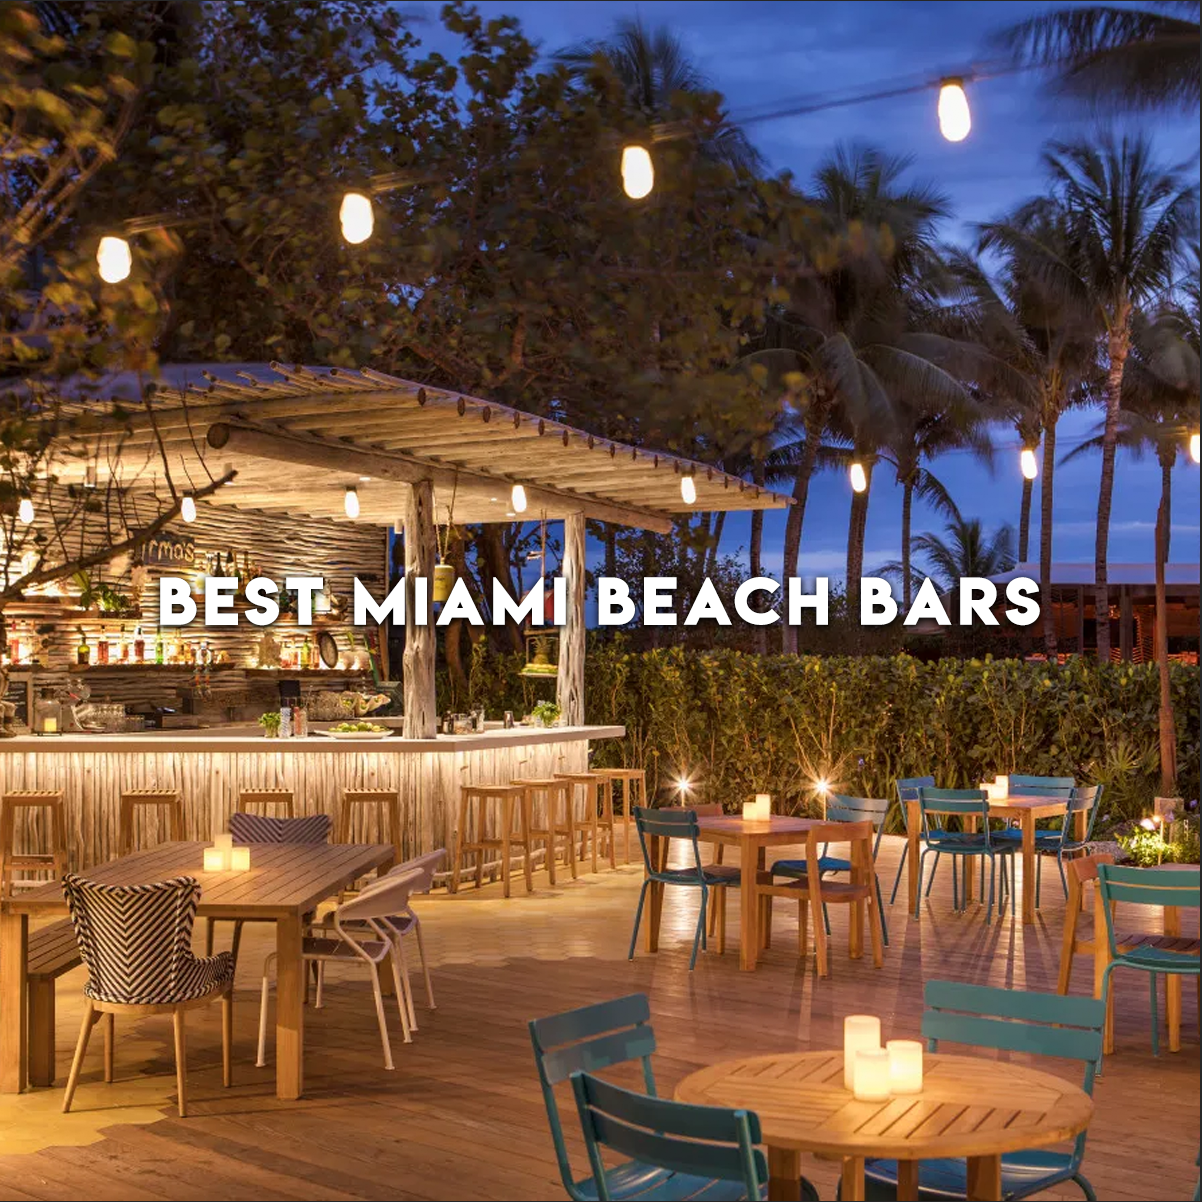 Best Miami Beach bars